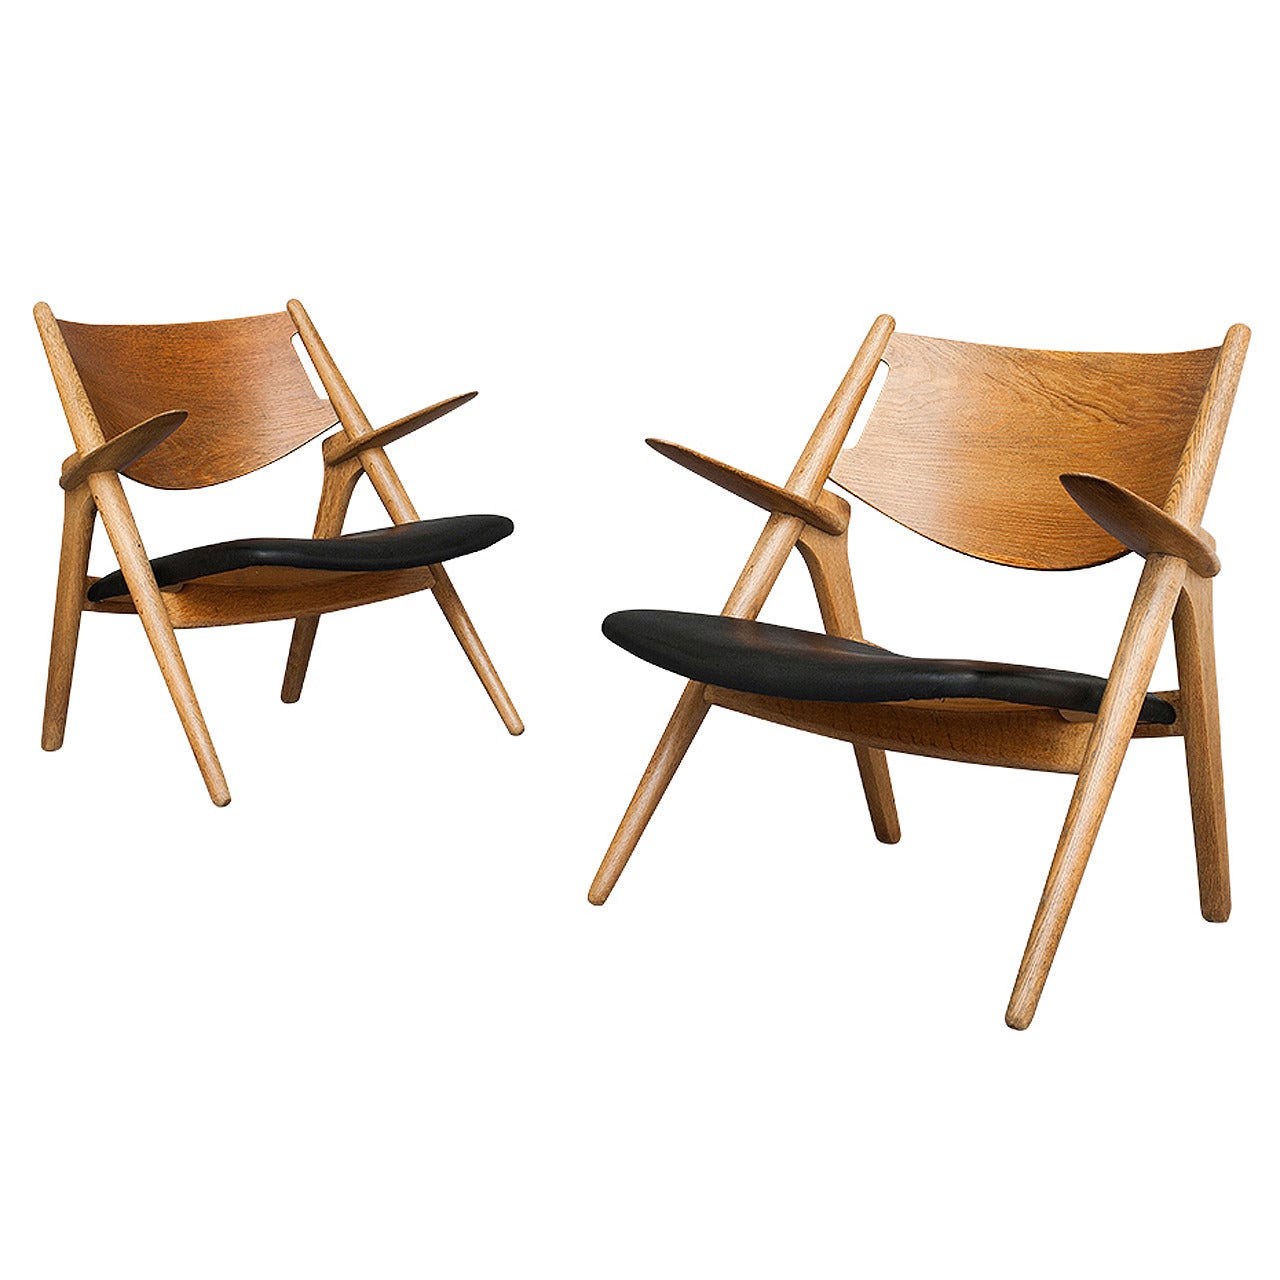 Pair of "Sawbuck" Lounge Chairs by Hans J. Wegner for Carl Hansen & Son